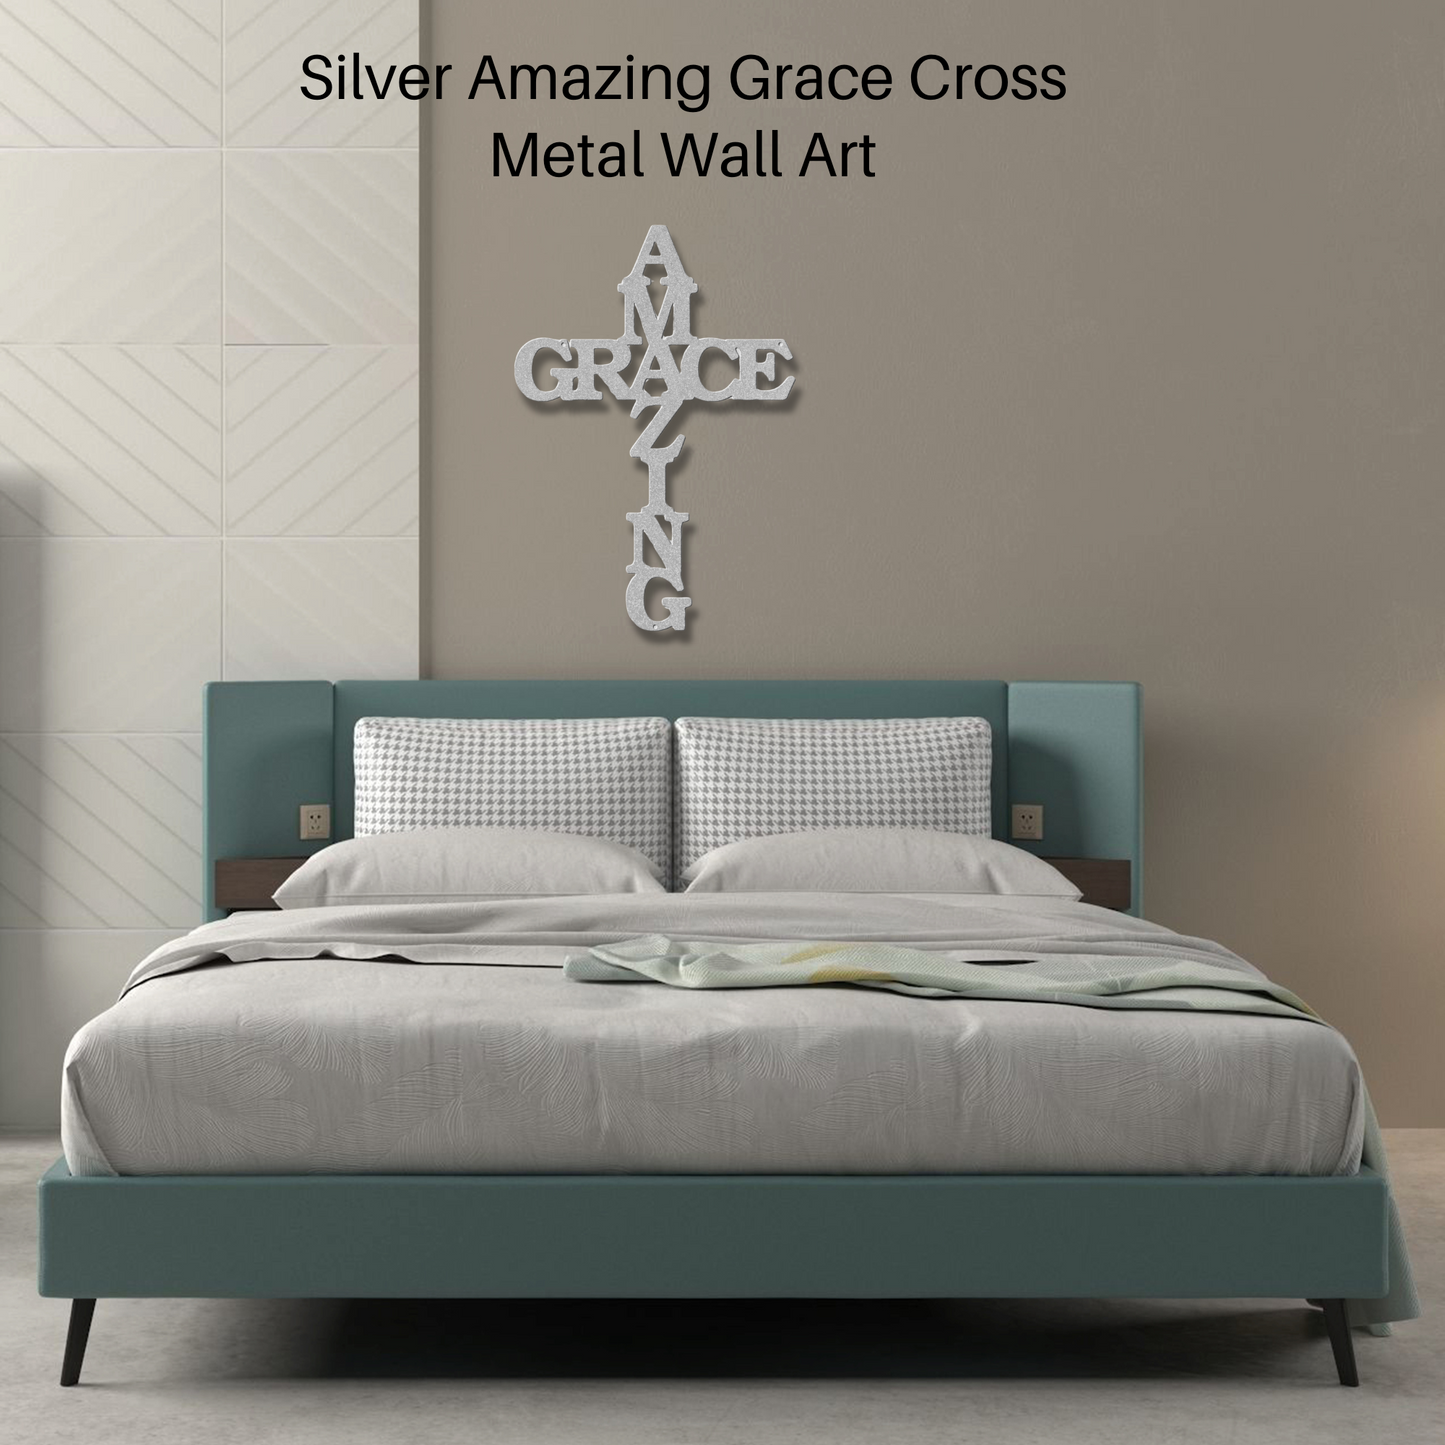 Amazing Grace Cross Metal Wall Art silver over bed in bedroom